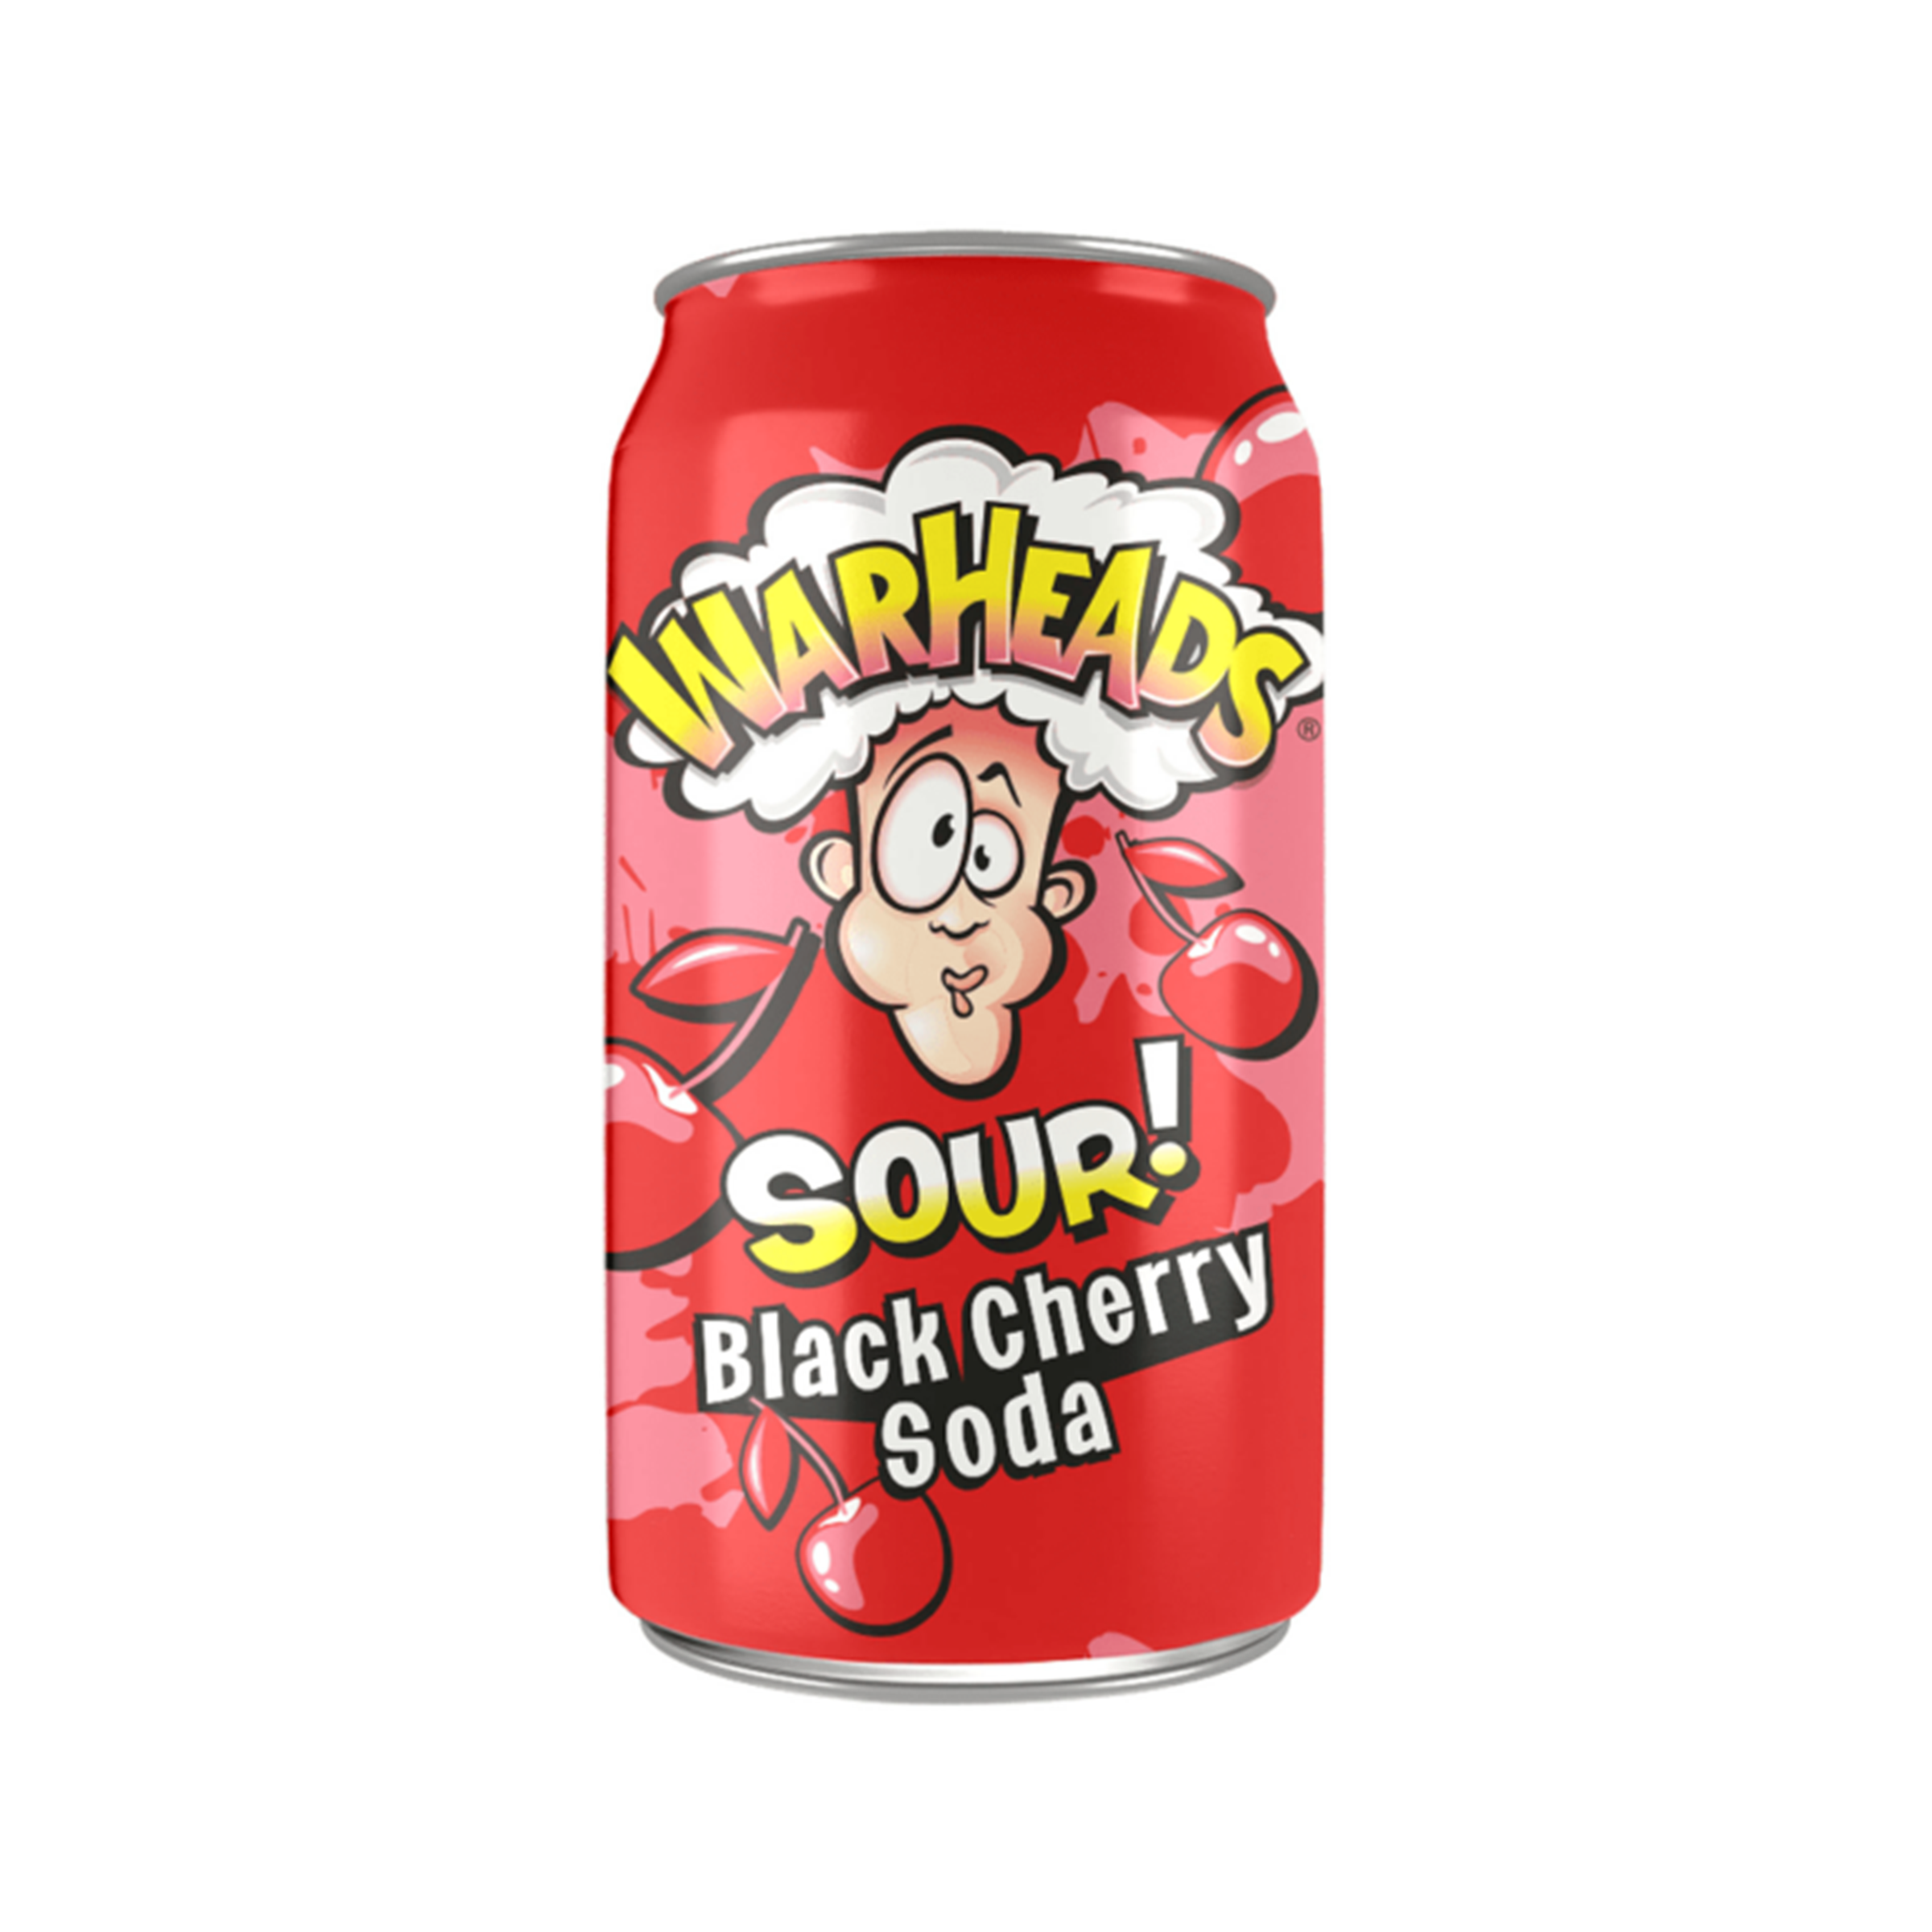 Warheads Sour Soda - Black Cherry